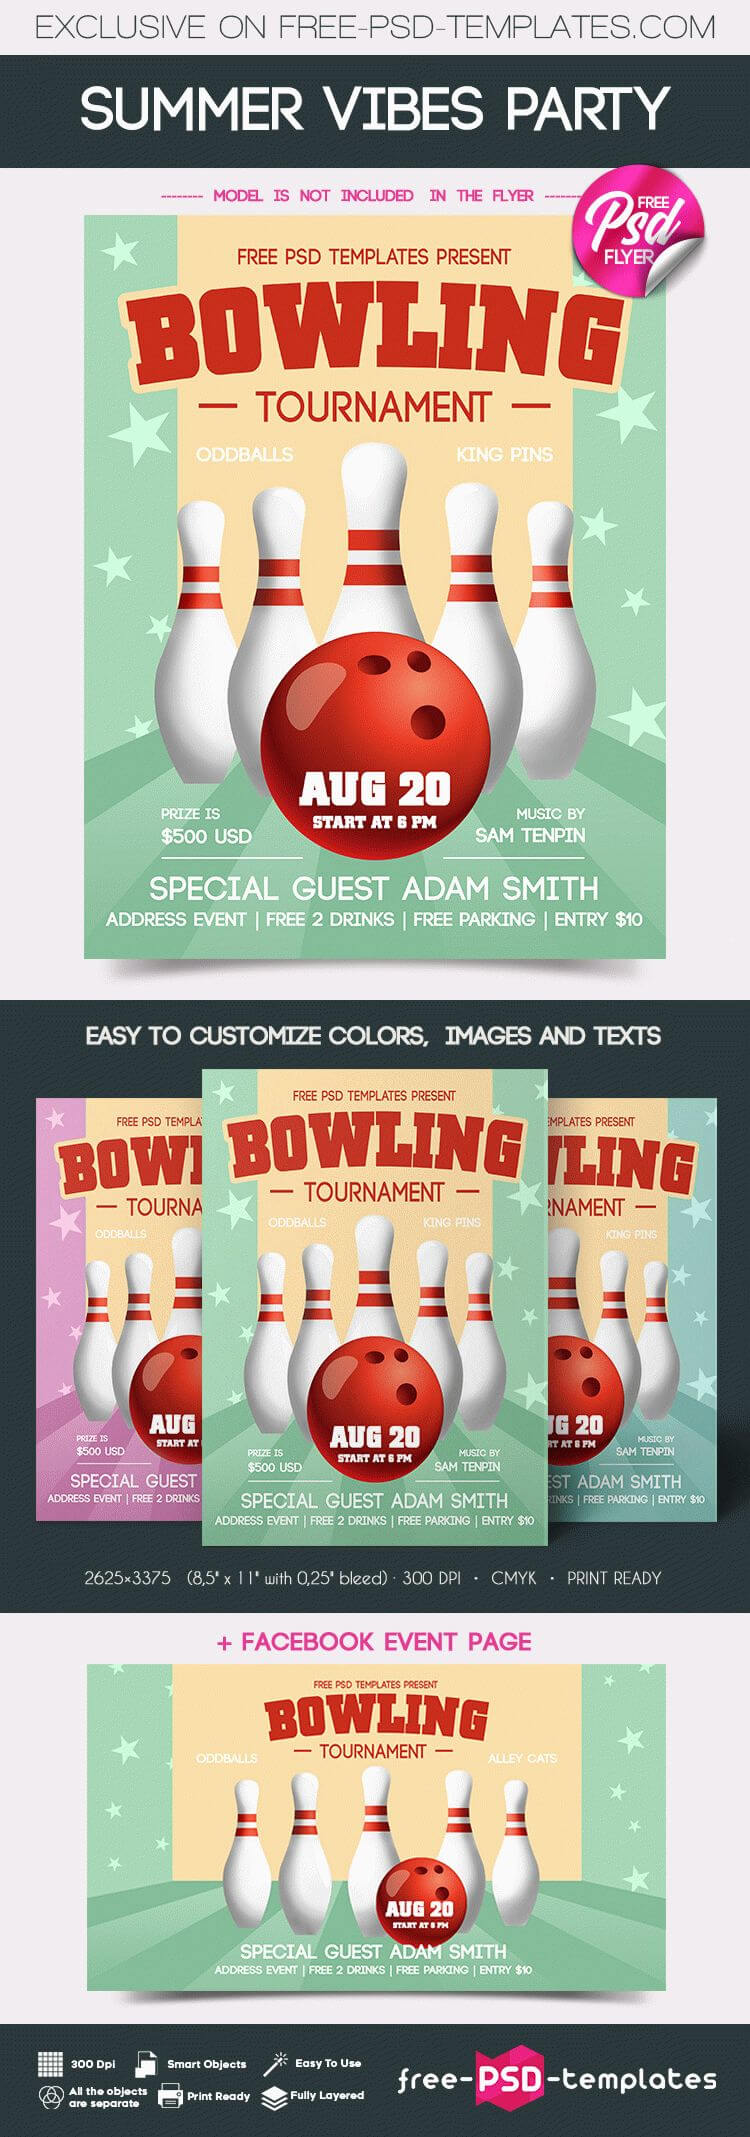 Free Bowling Tournament Flyer | Free Psd Templates Pertaining To Bowling Flyers Templates Free